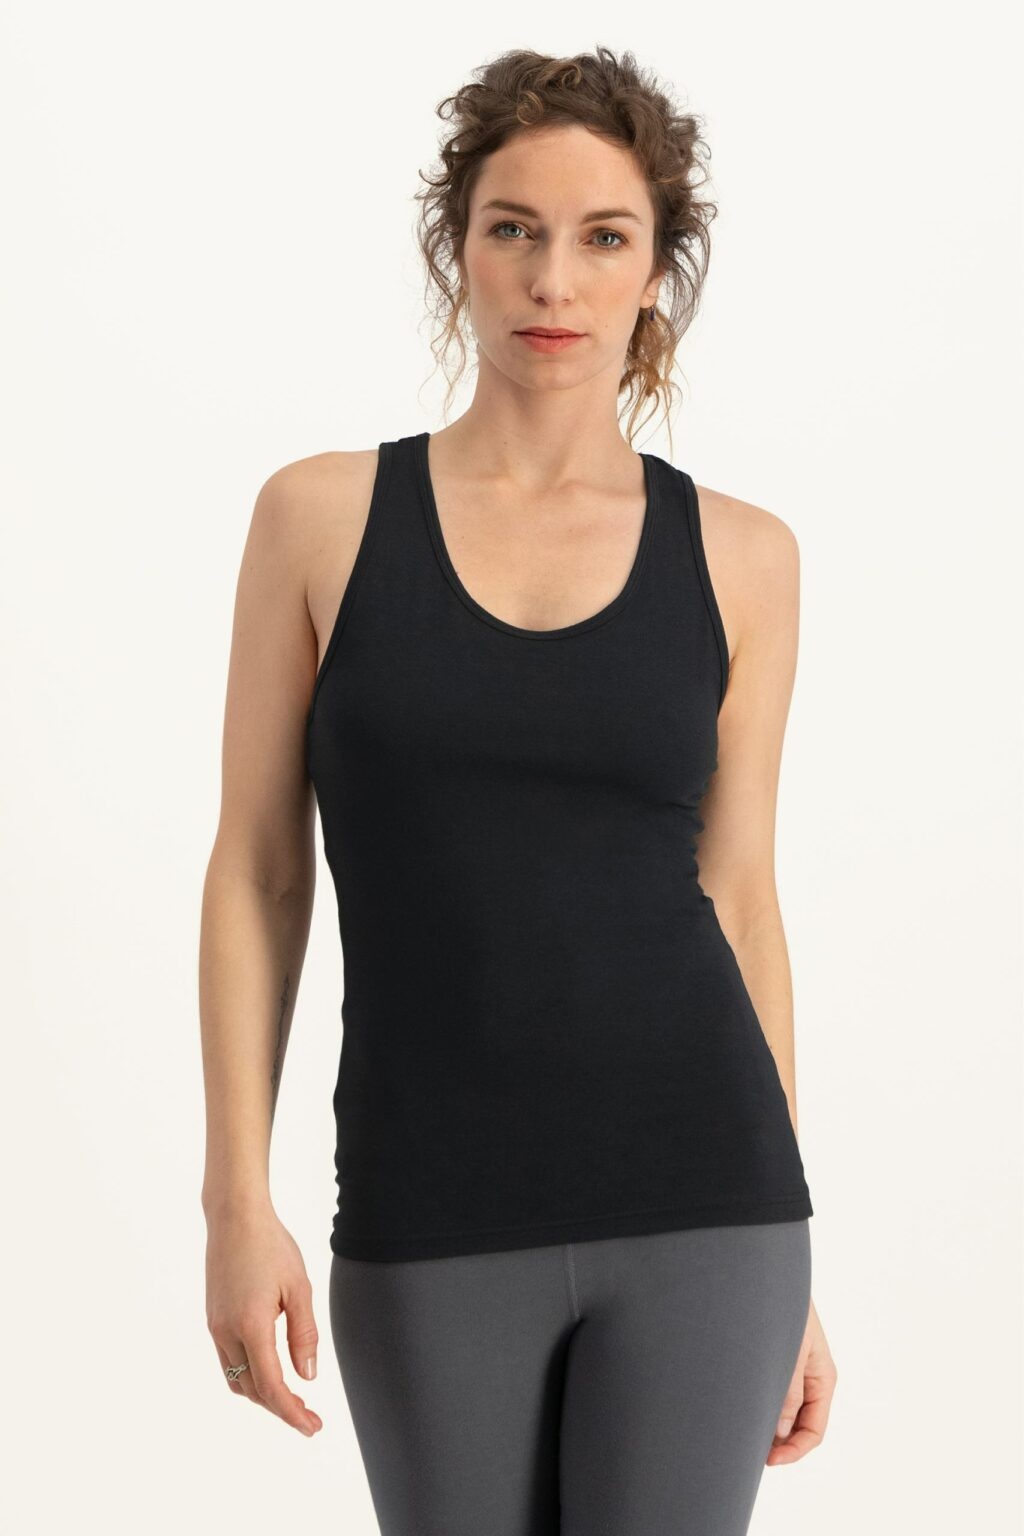 Black Yoga Tank Tops & Sleeveless Shirts.